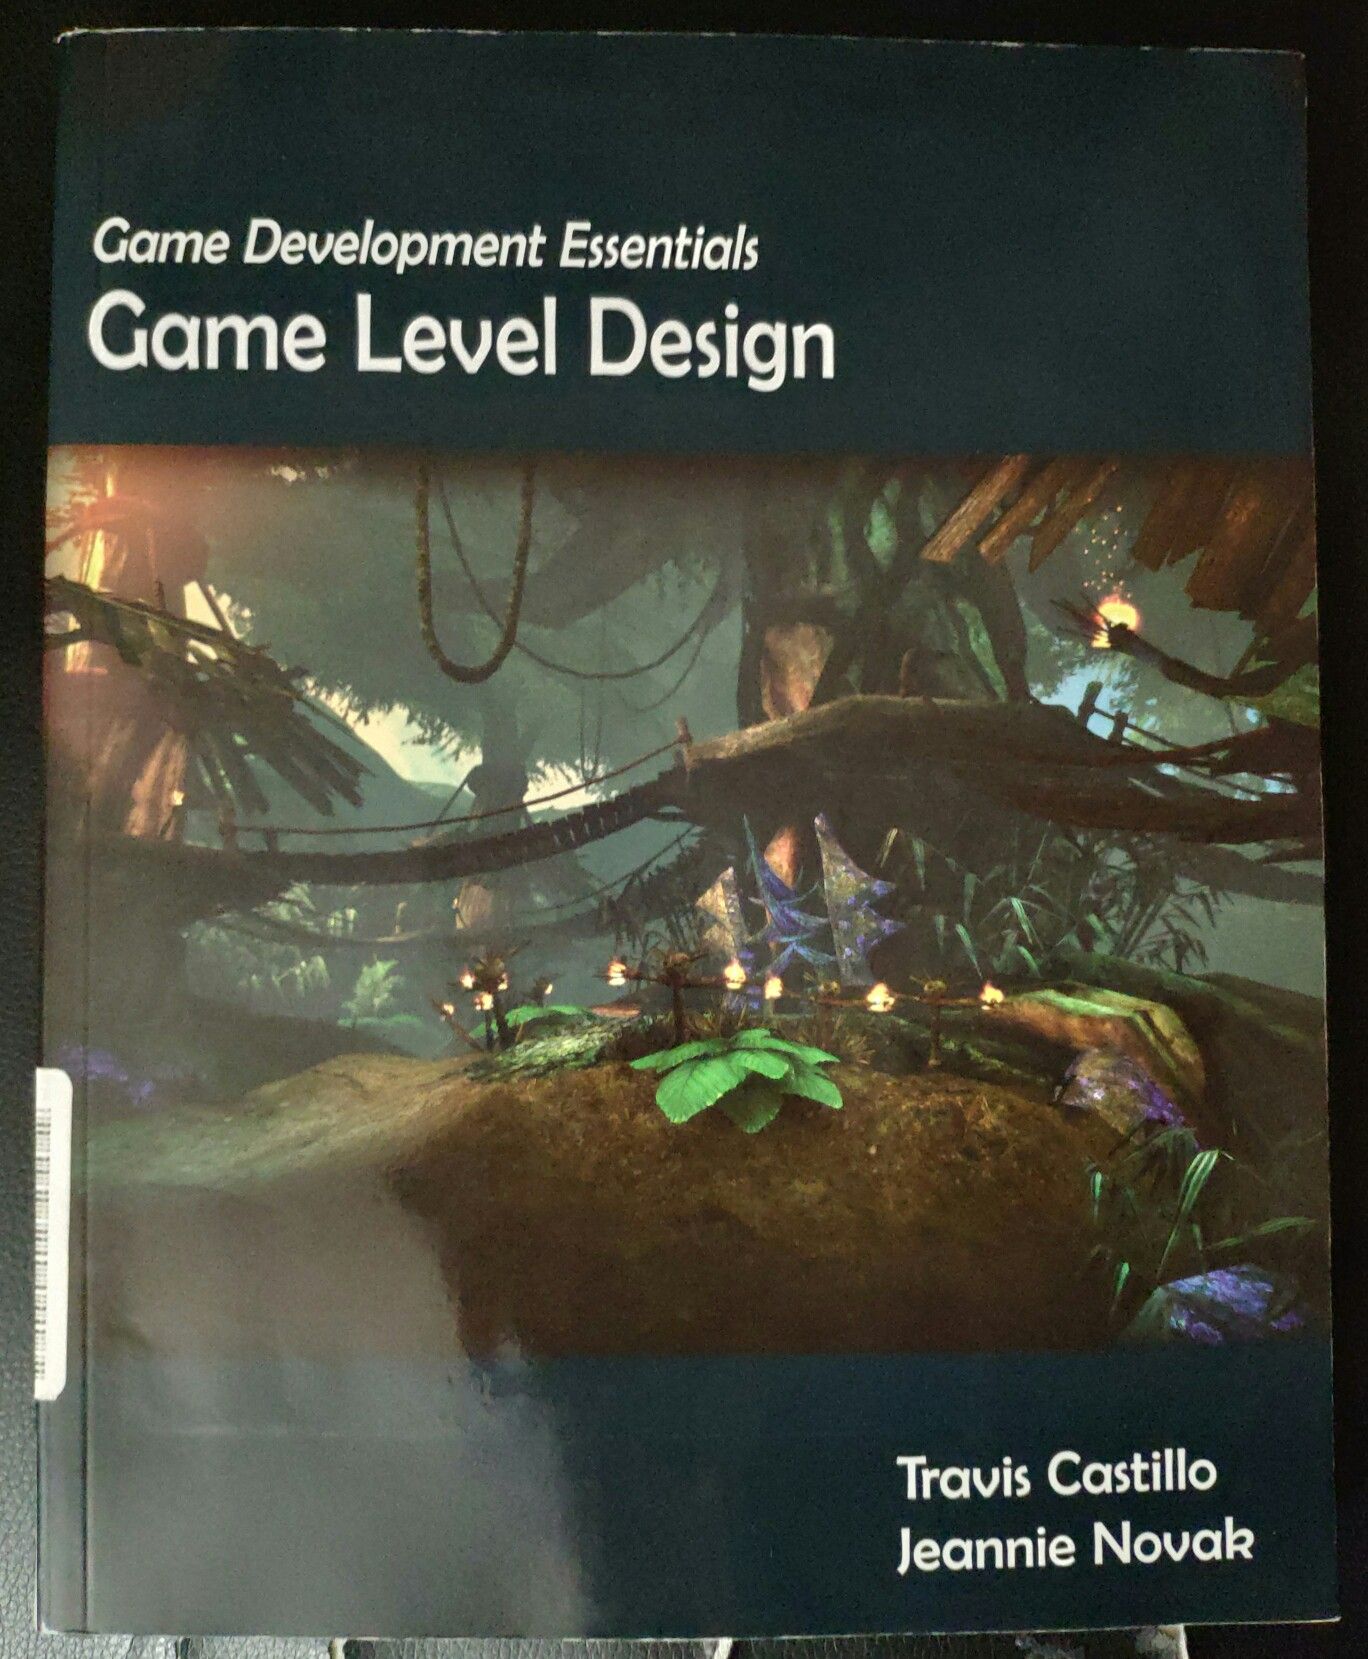 Game Development Essentials: Game Level Design by Castillo and Novak